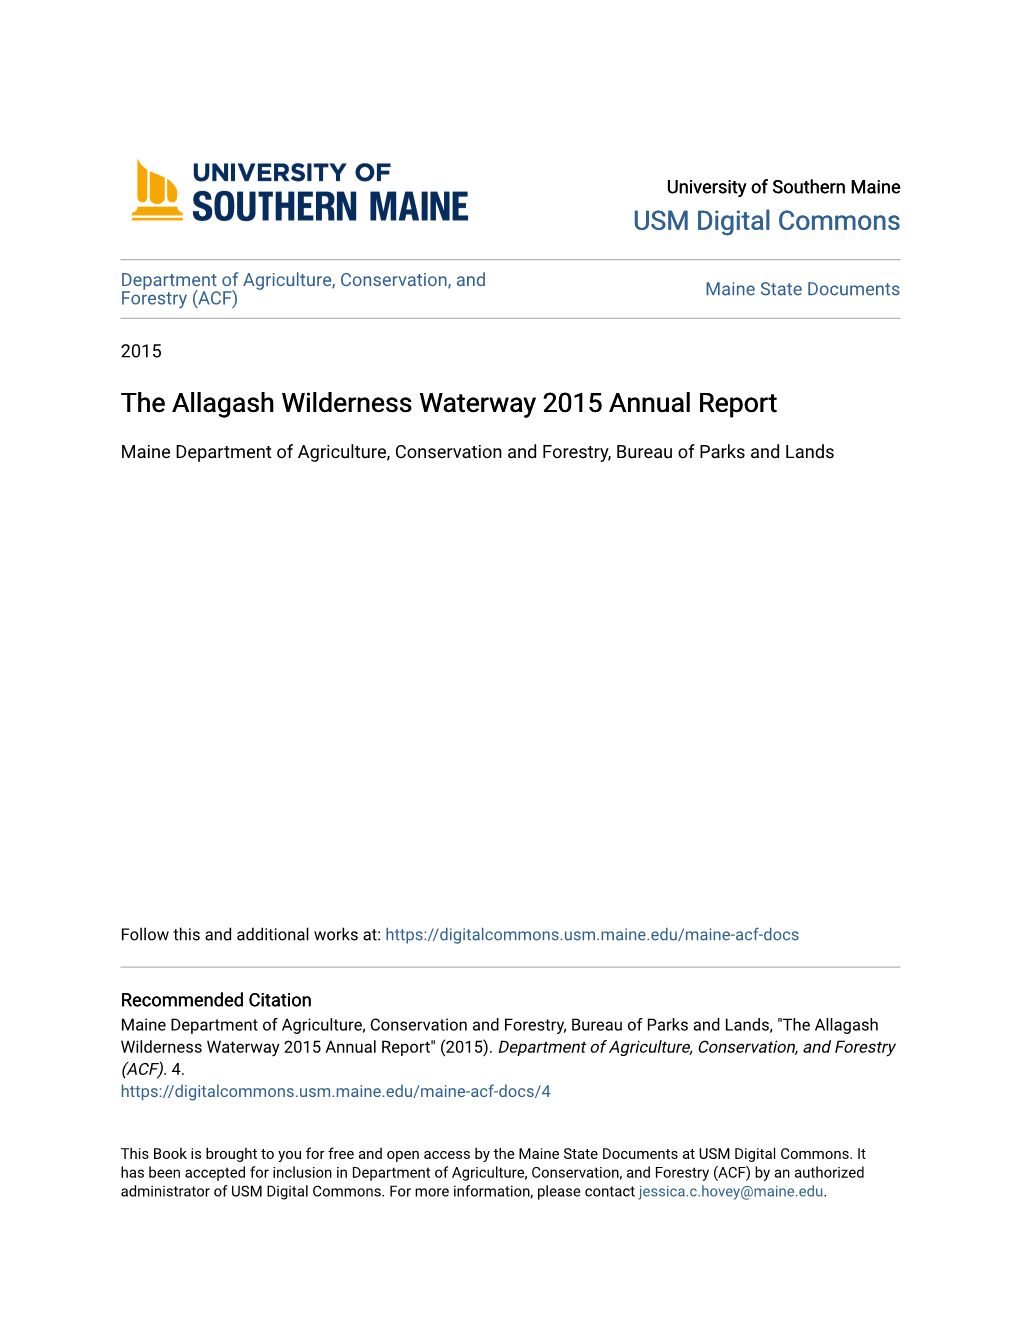 The Allagash Wilderness Waterway 2015 Annual Report